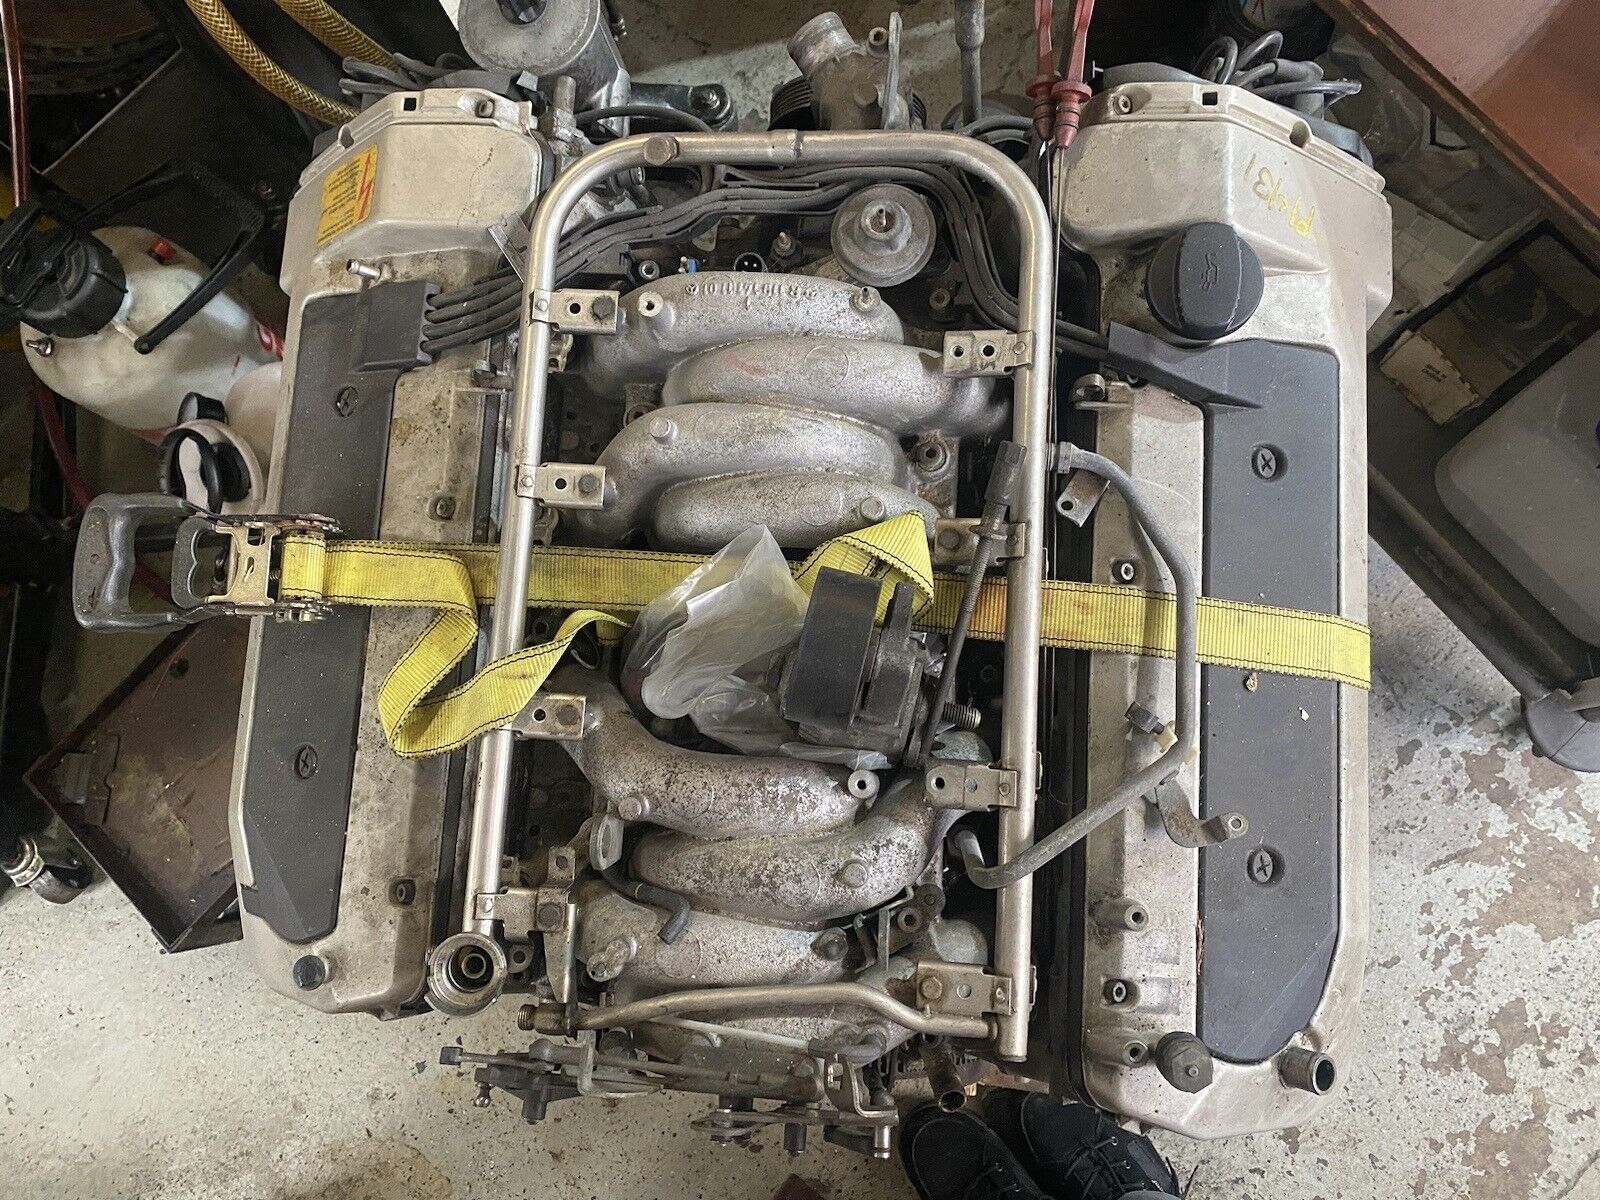 M119 V8 Engine Assembly for 93-95 Mercedes W140 W124 S420 E420 400SEL